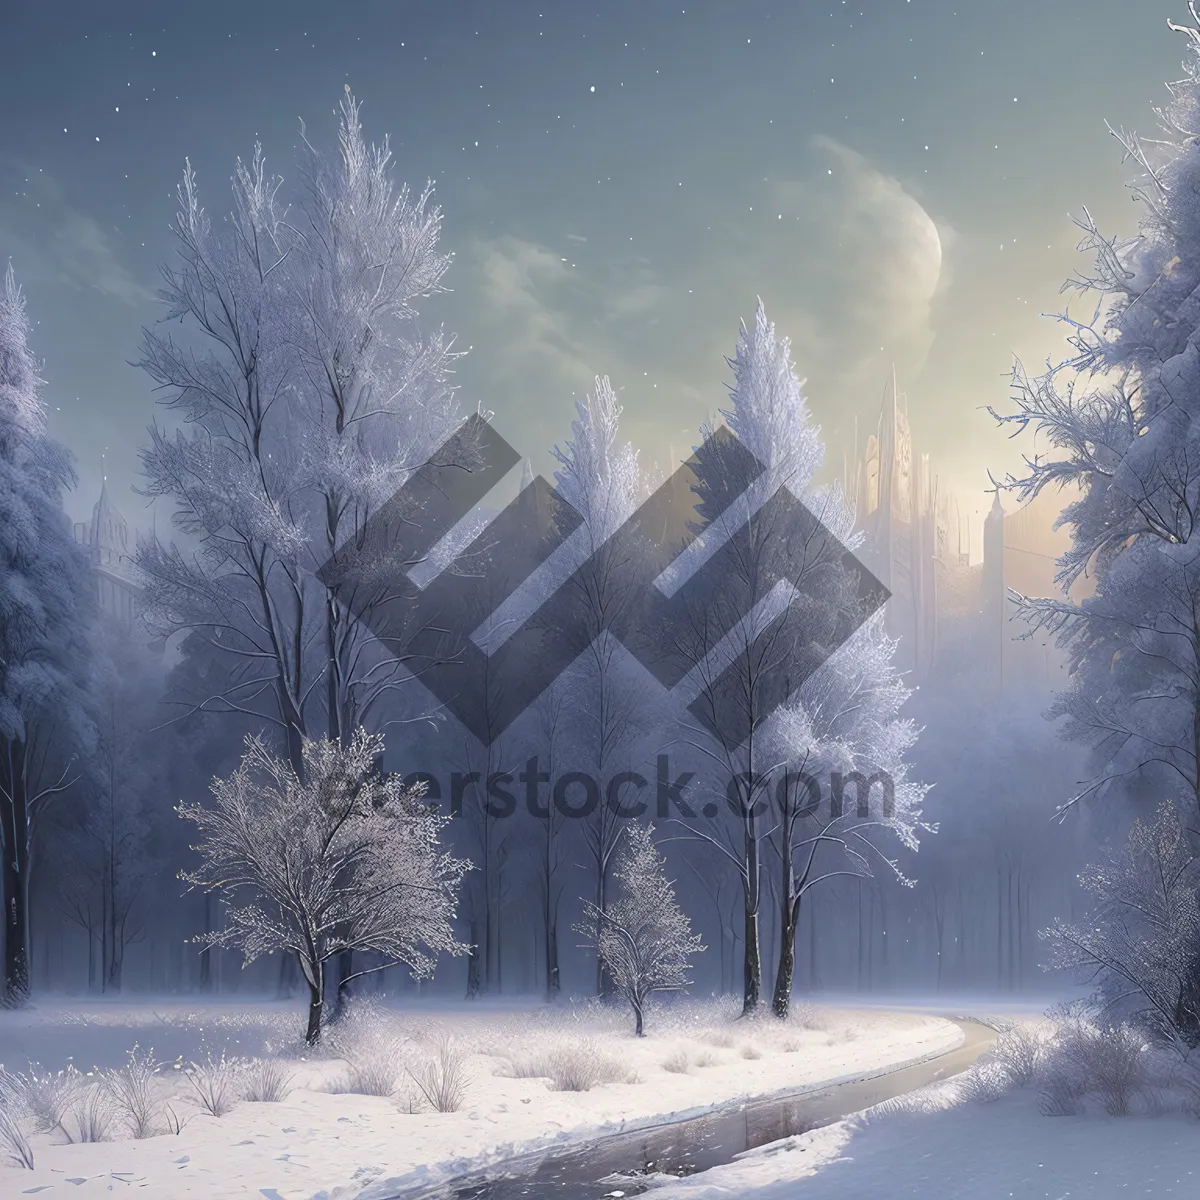 Picture of Winter Wonderland: Snowy Forest Landscape Under Frosty Sky